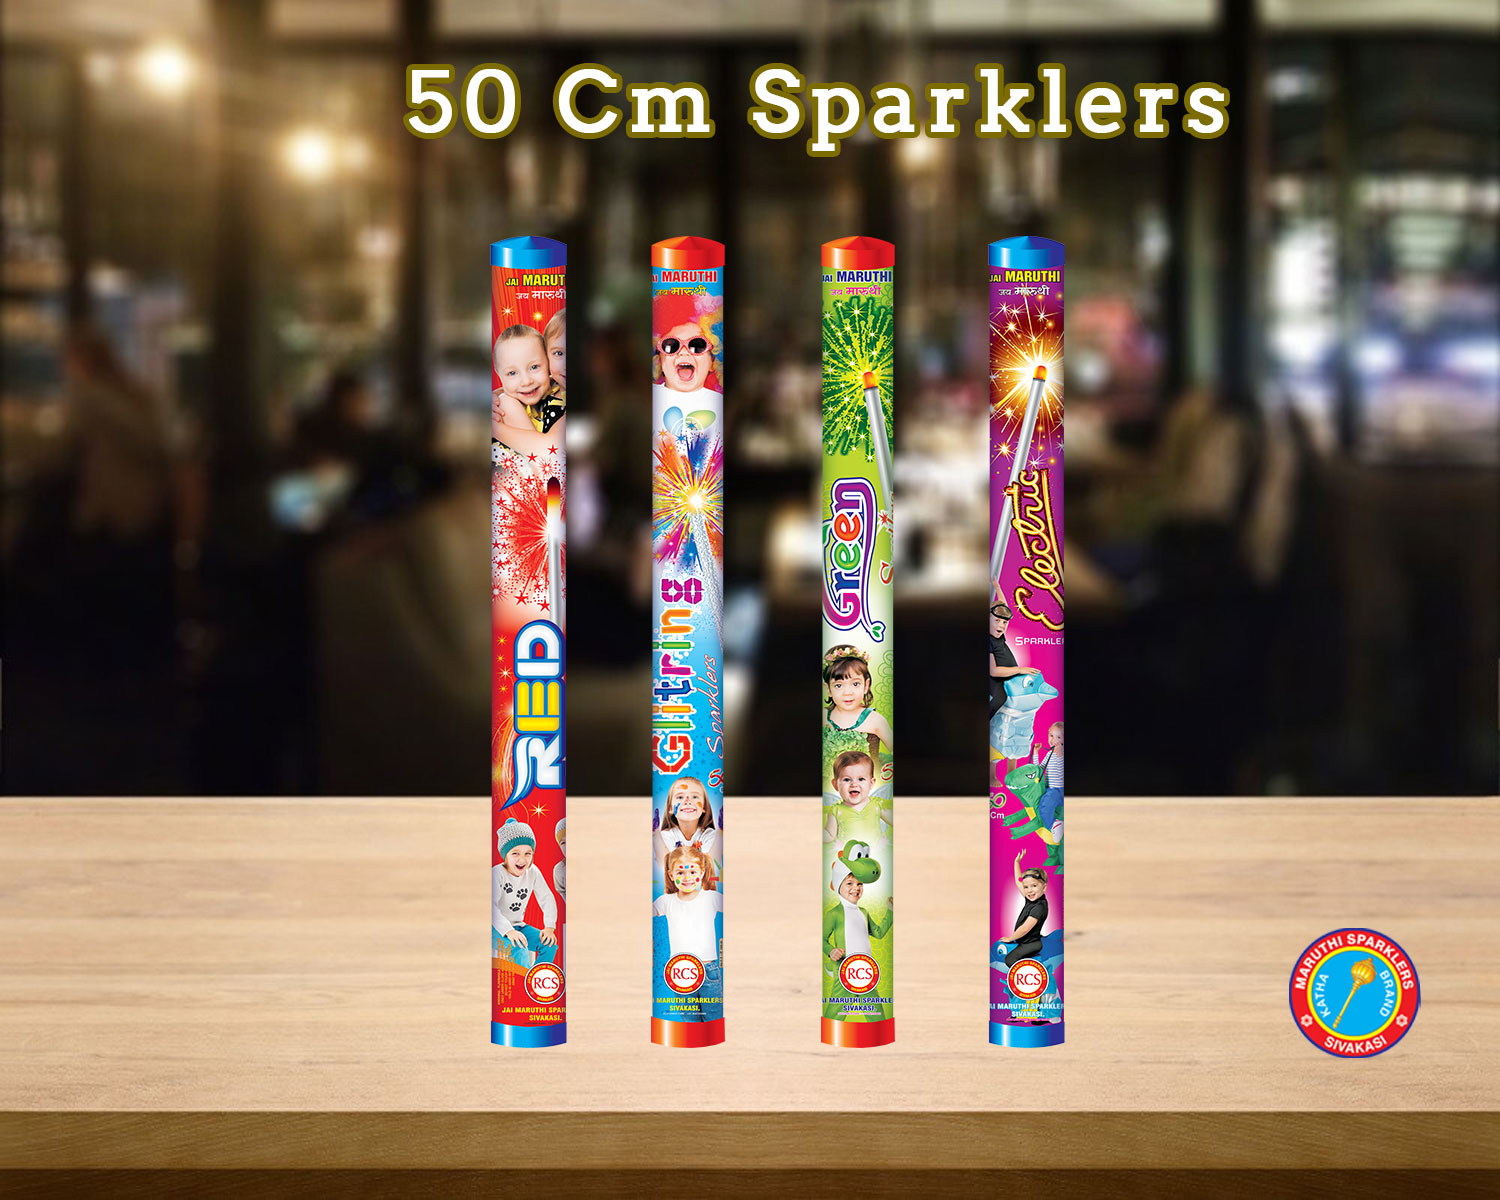 50 CM SPARKLERS